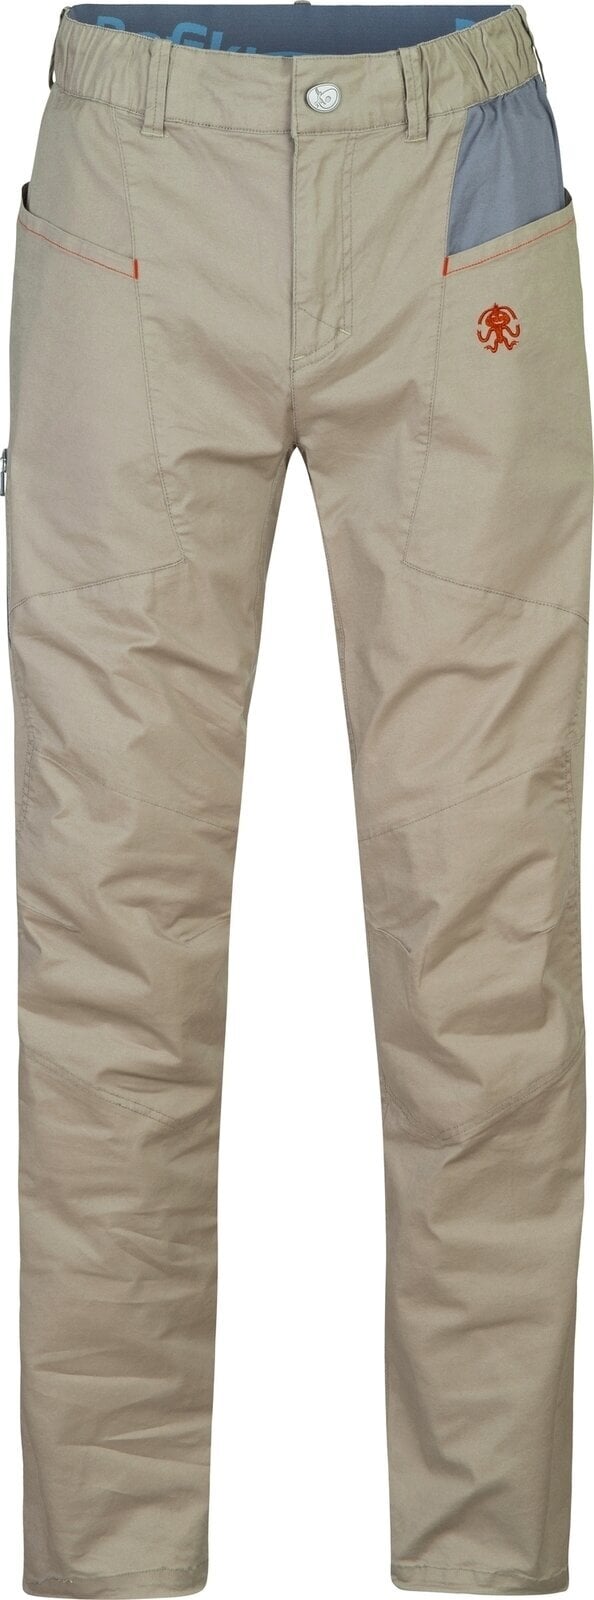 Outdoor Pants Rafiki Crag Man Pants Brindle/Ink L Outdoor Pants